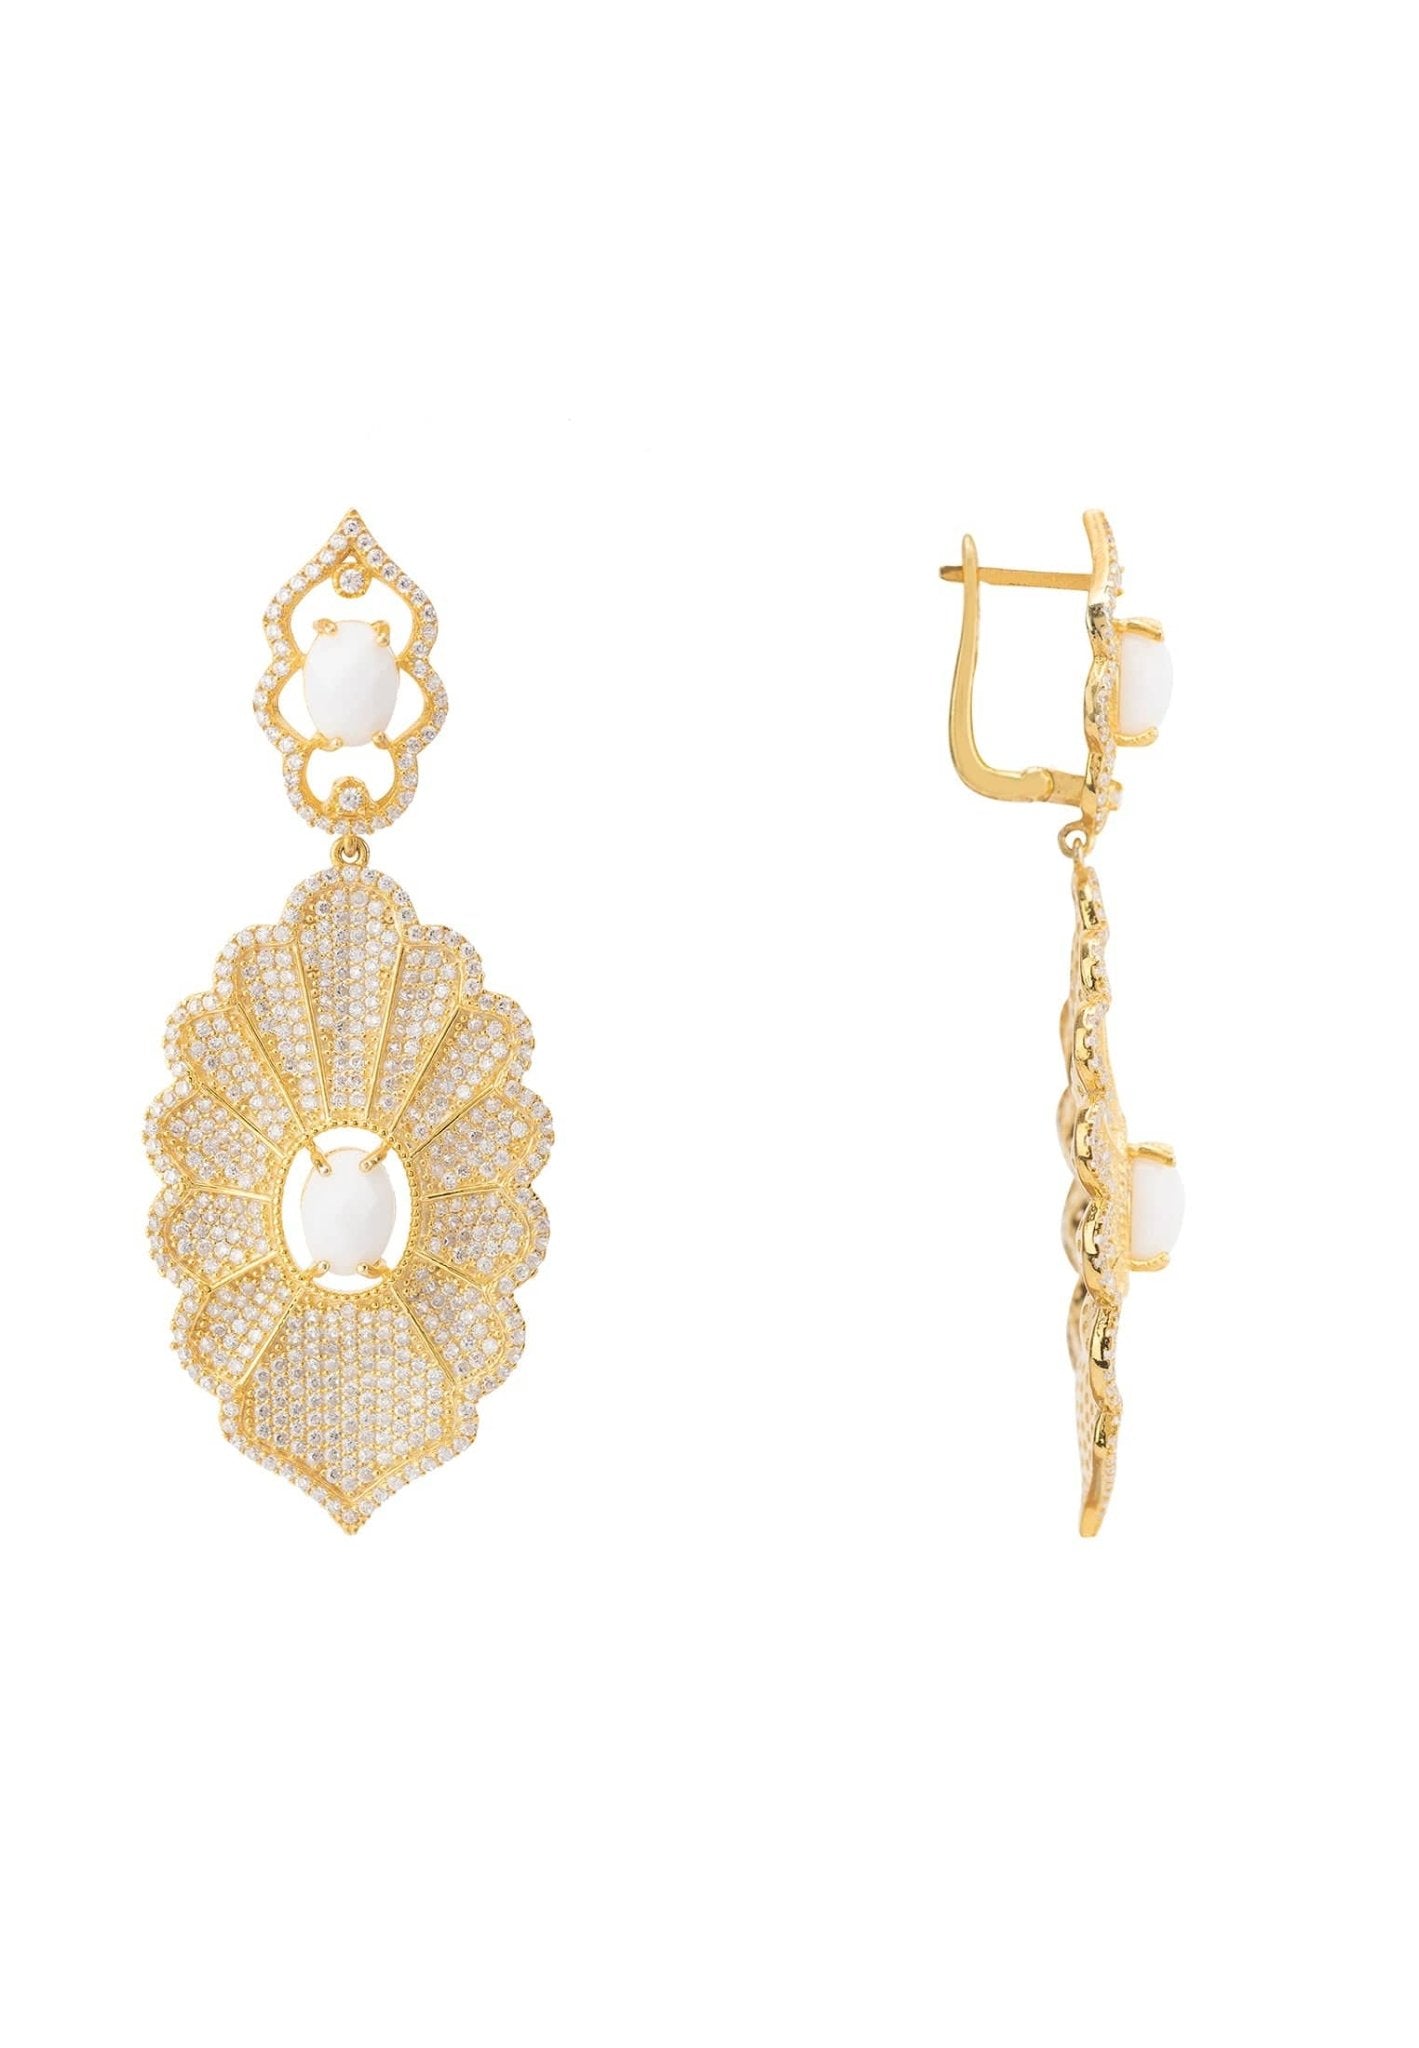 Danbury Earrings White Cz Gold - LATELITA Earrings